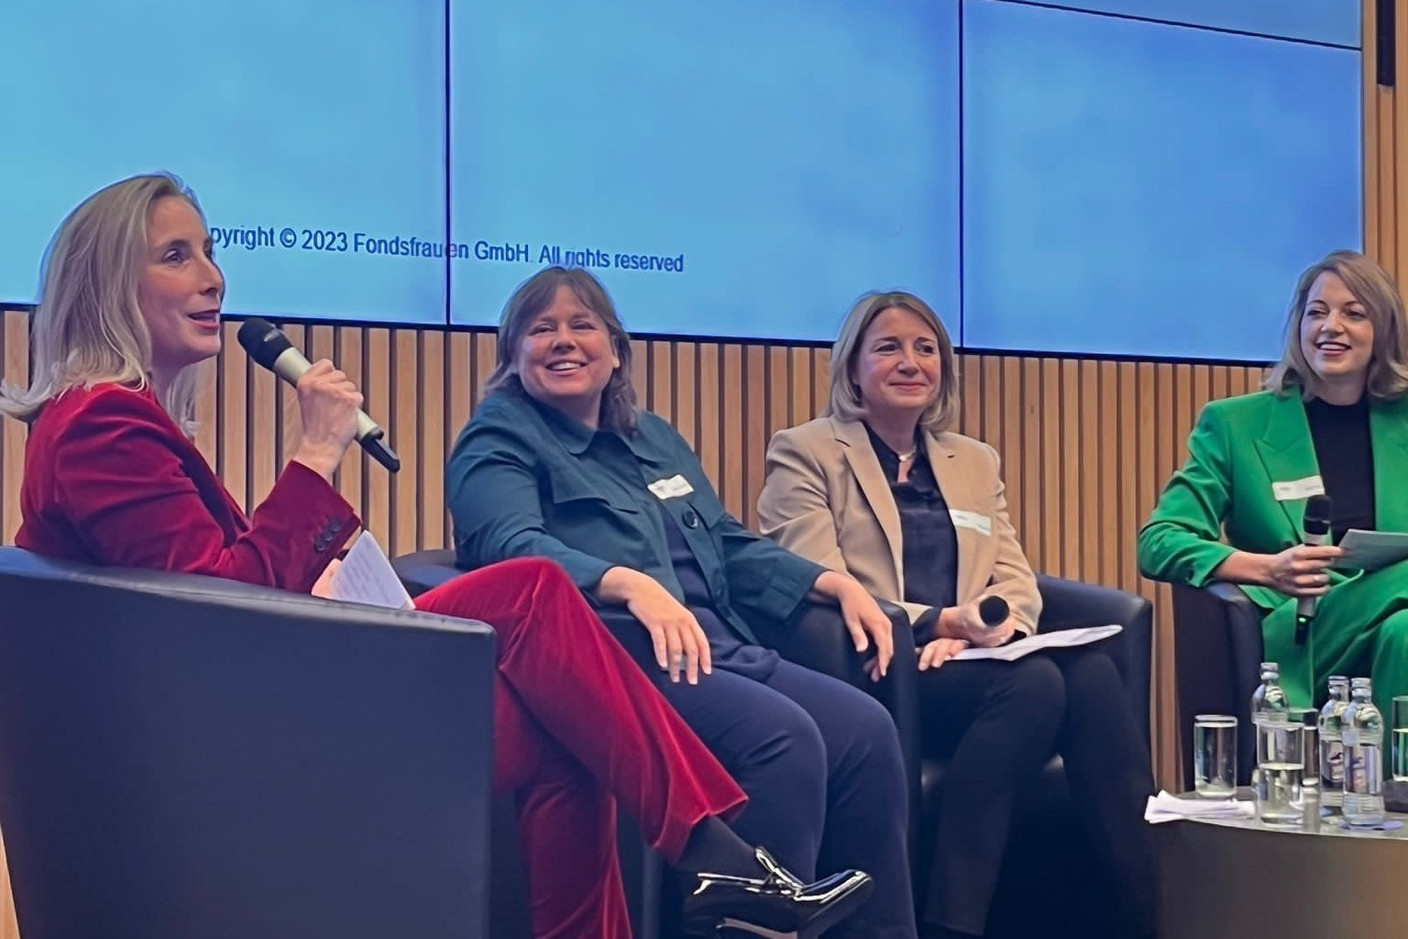 (L-R) Martine Capus, Corinne Lamesch, Valerie Hesse and Laura Zahren during the Fondsfrauen panel discussion, 24 October 2023. Photo: Fondsfrauen